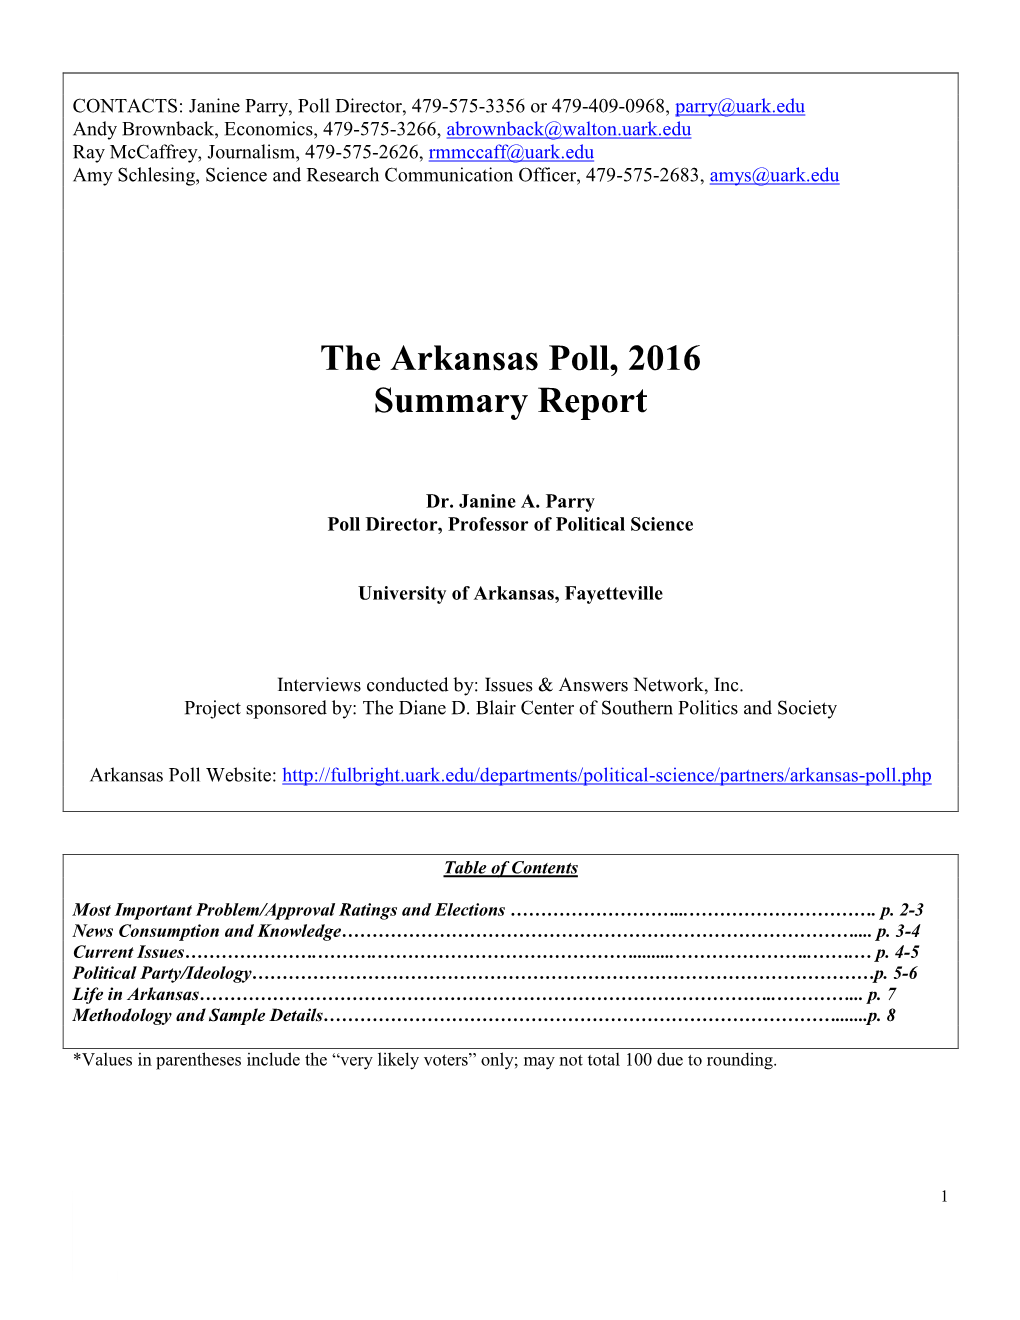 The Arkansas Poll, 2016 Summary Report